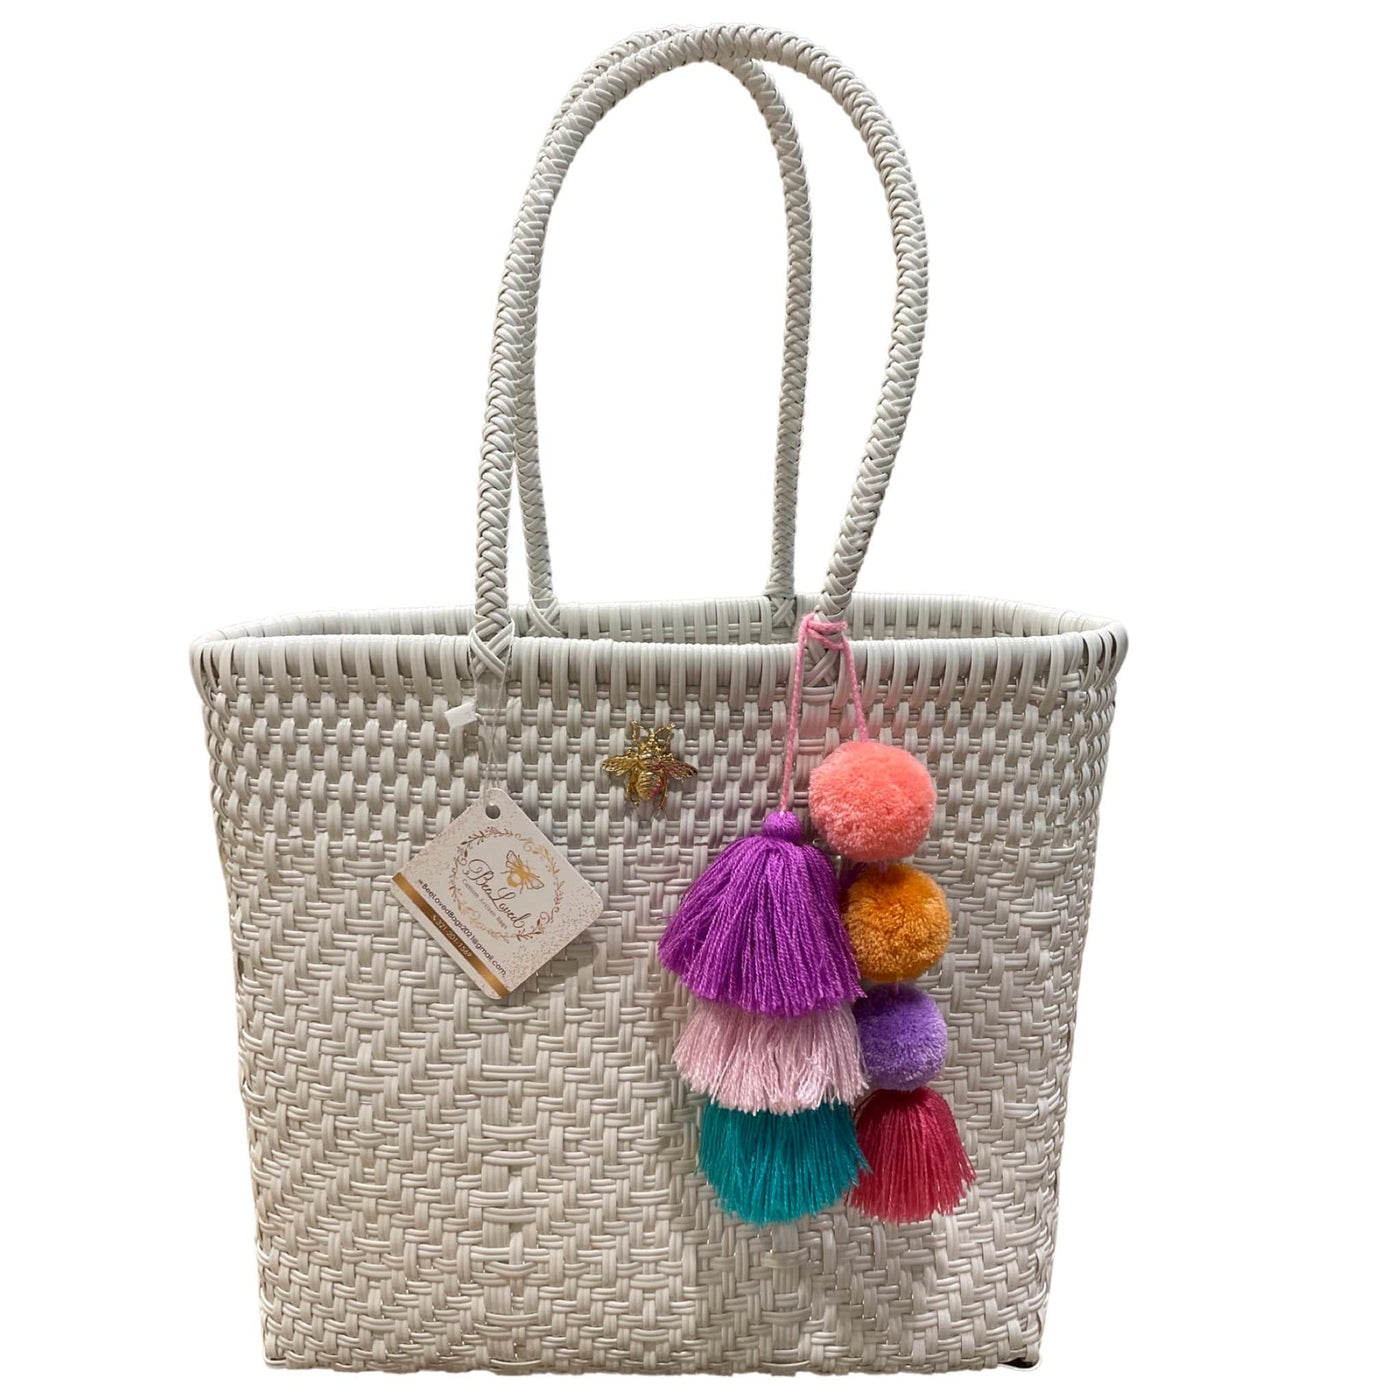 BeeLoved Custom Artisan Bags and Gifts Handbags Medium Arctic White Beech Bag